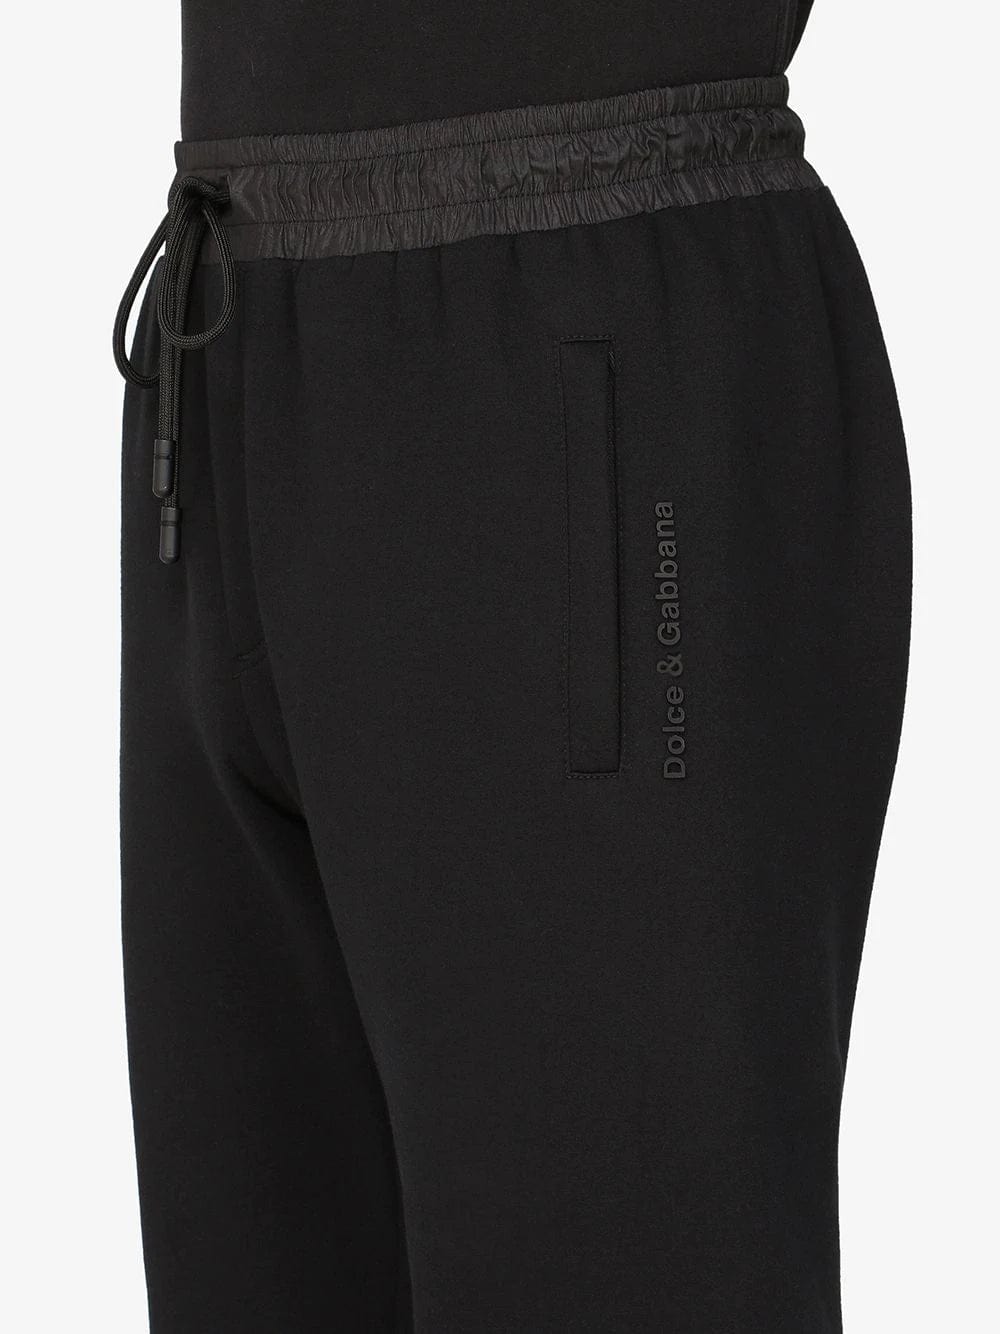 Dolce & Gabbana Jersey Jogging pants With DG logo